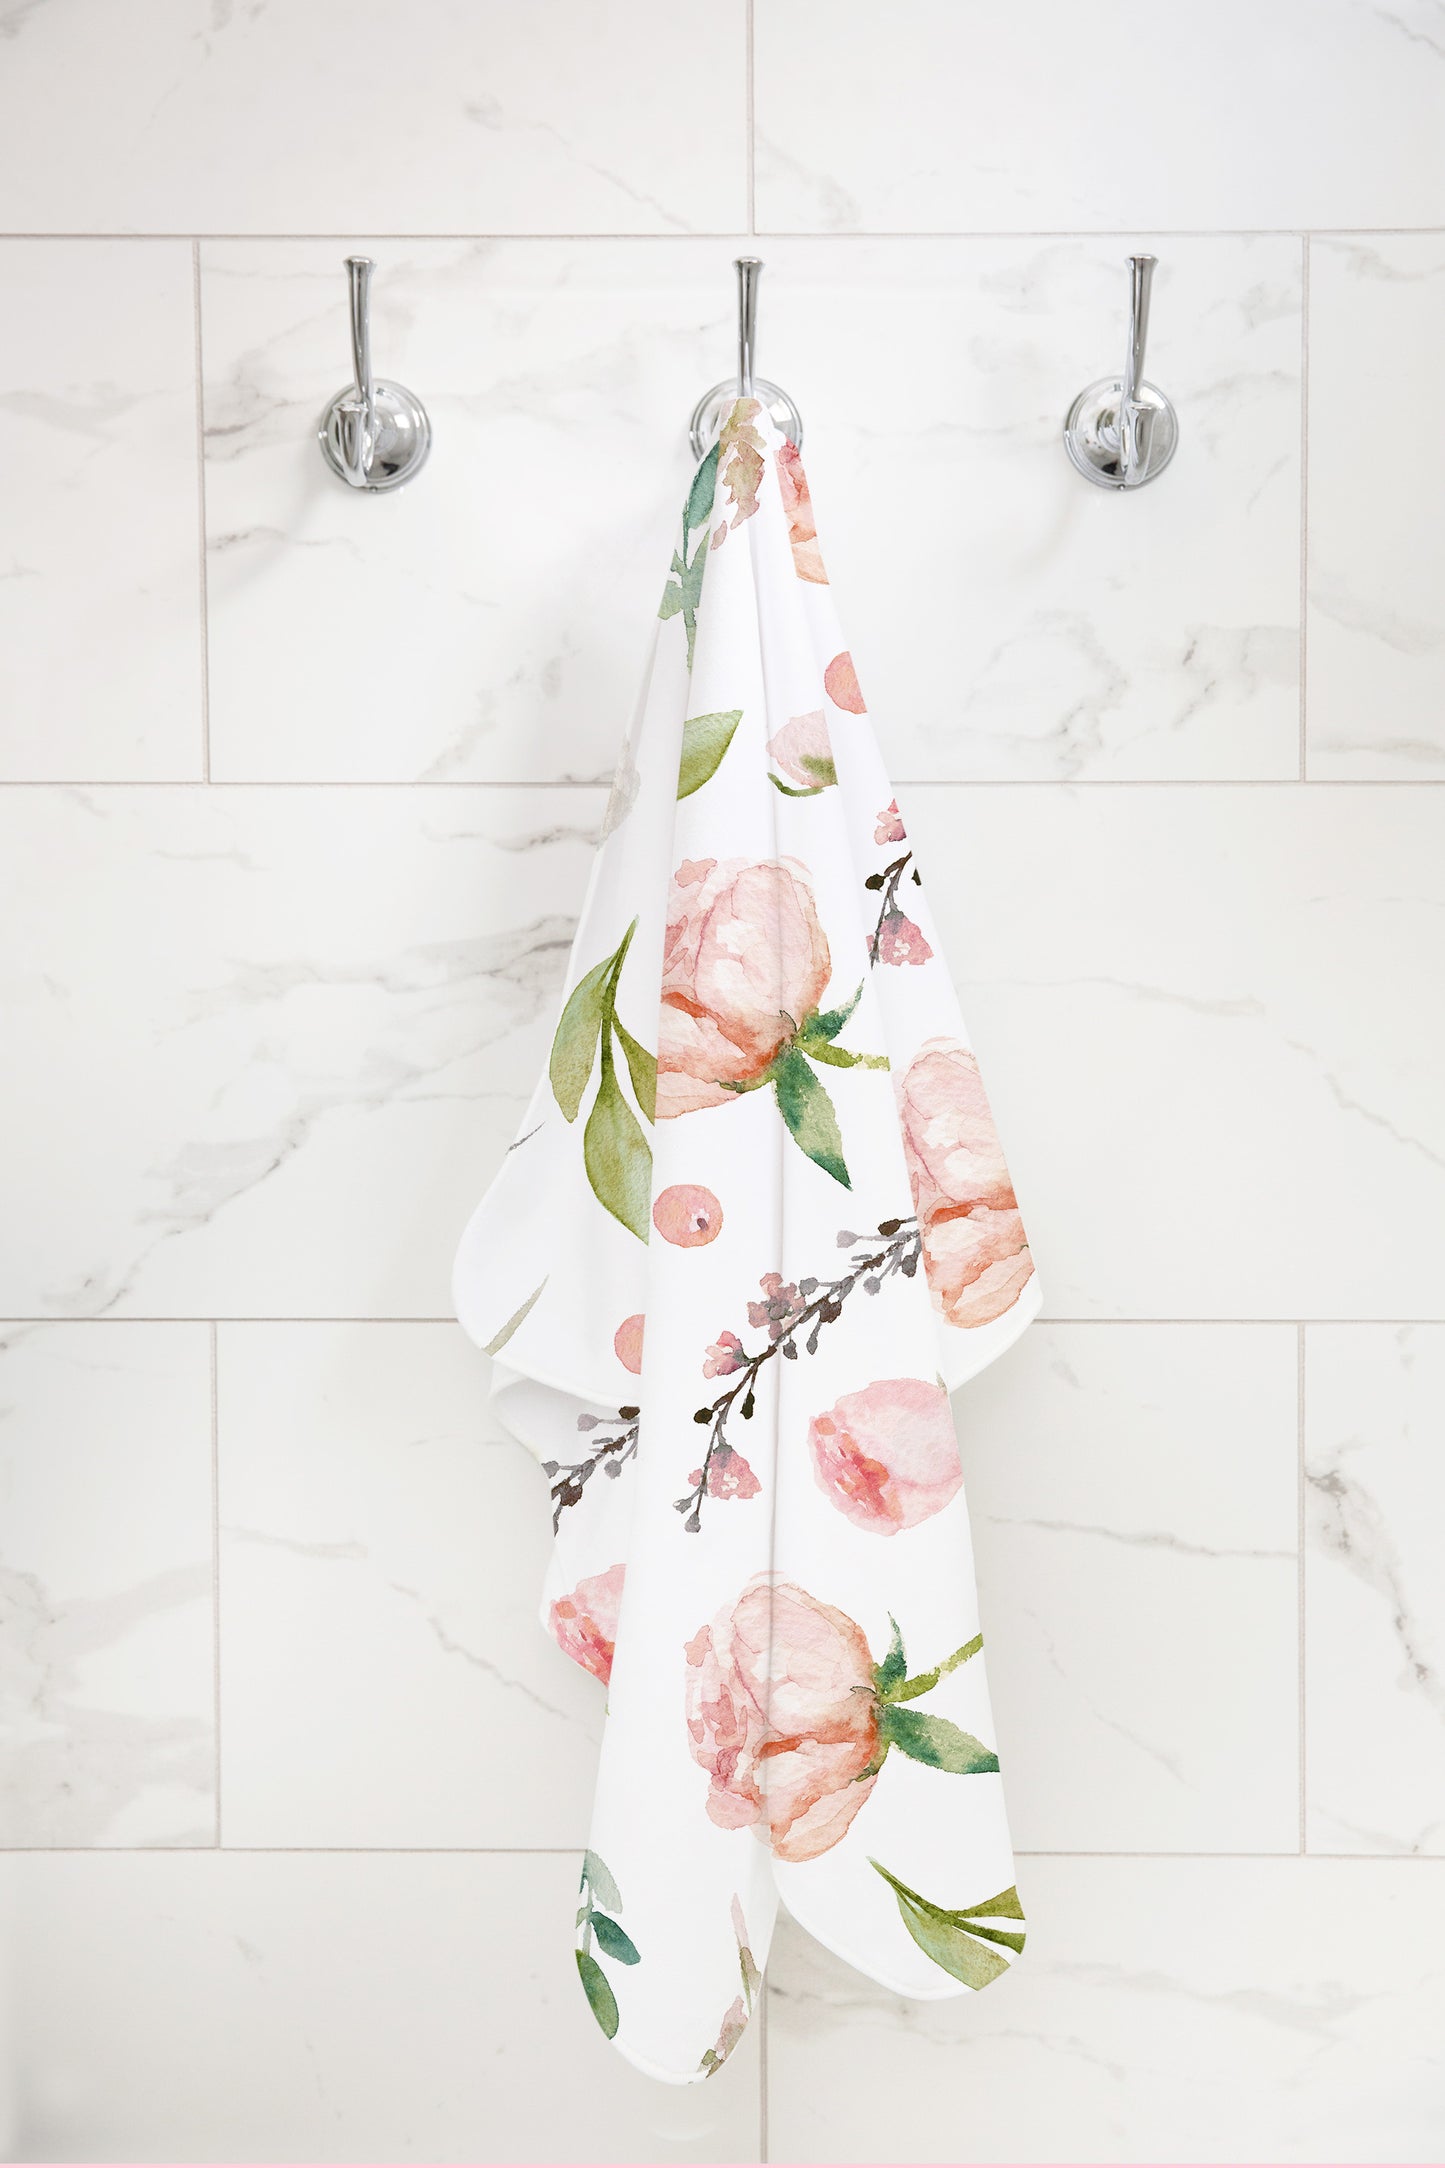 Floral Hooded Baby Towel, Baby Girl Bathroom Towel - Pastel Garden